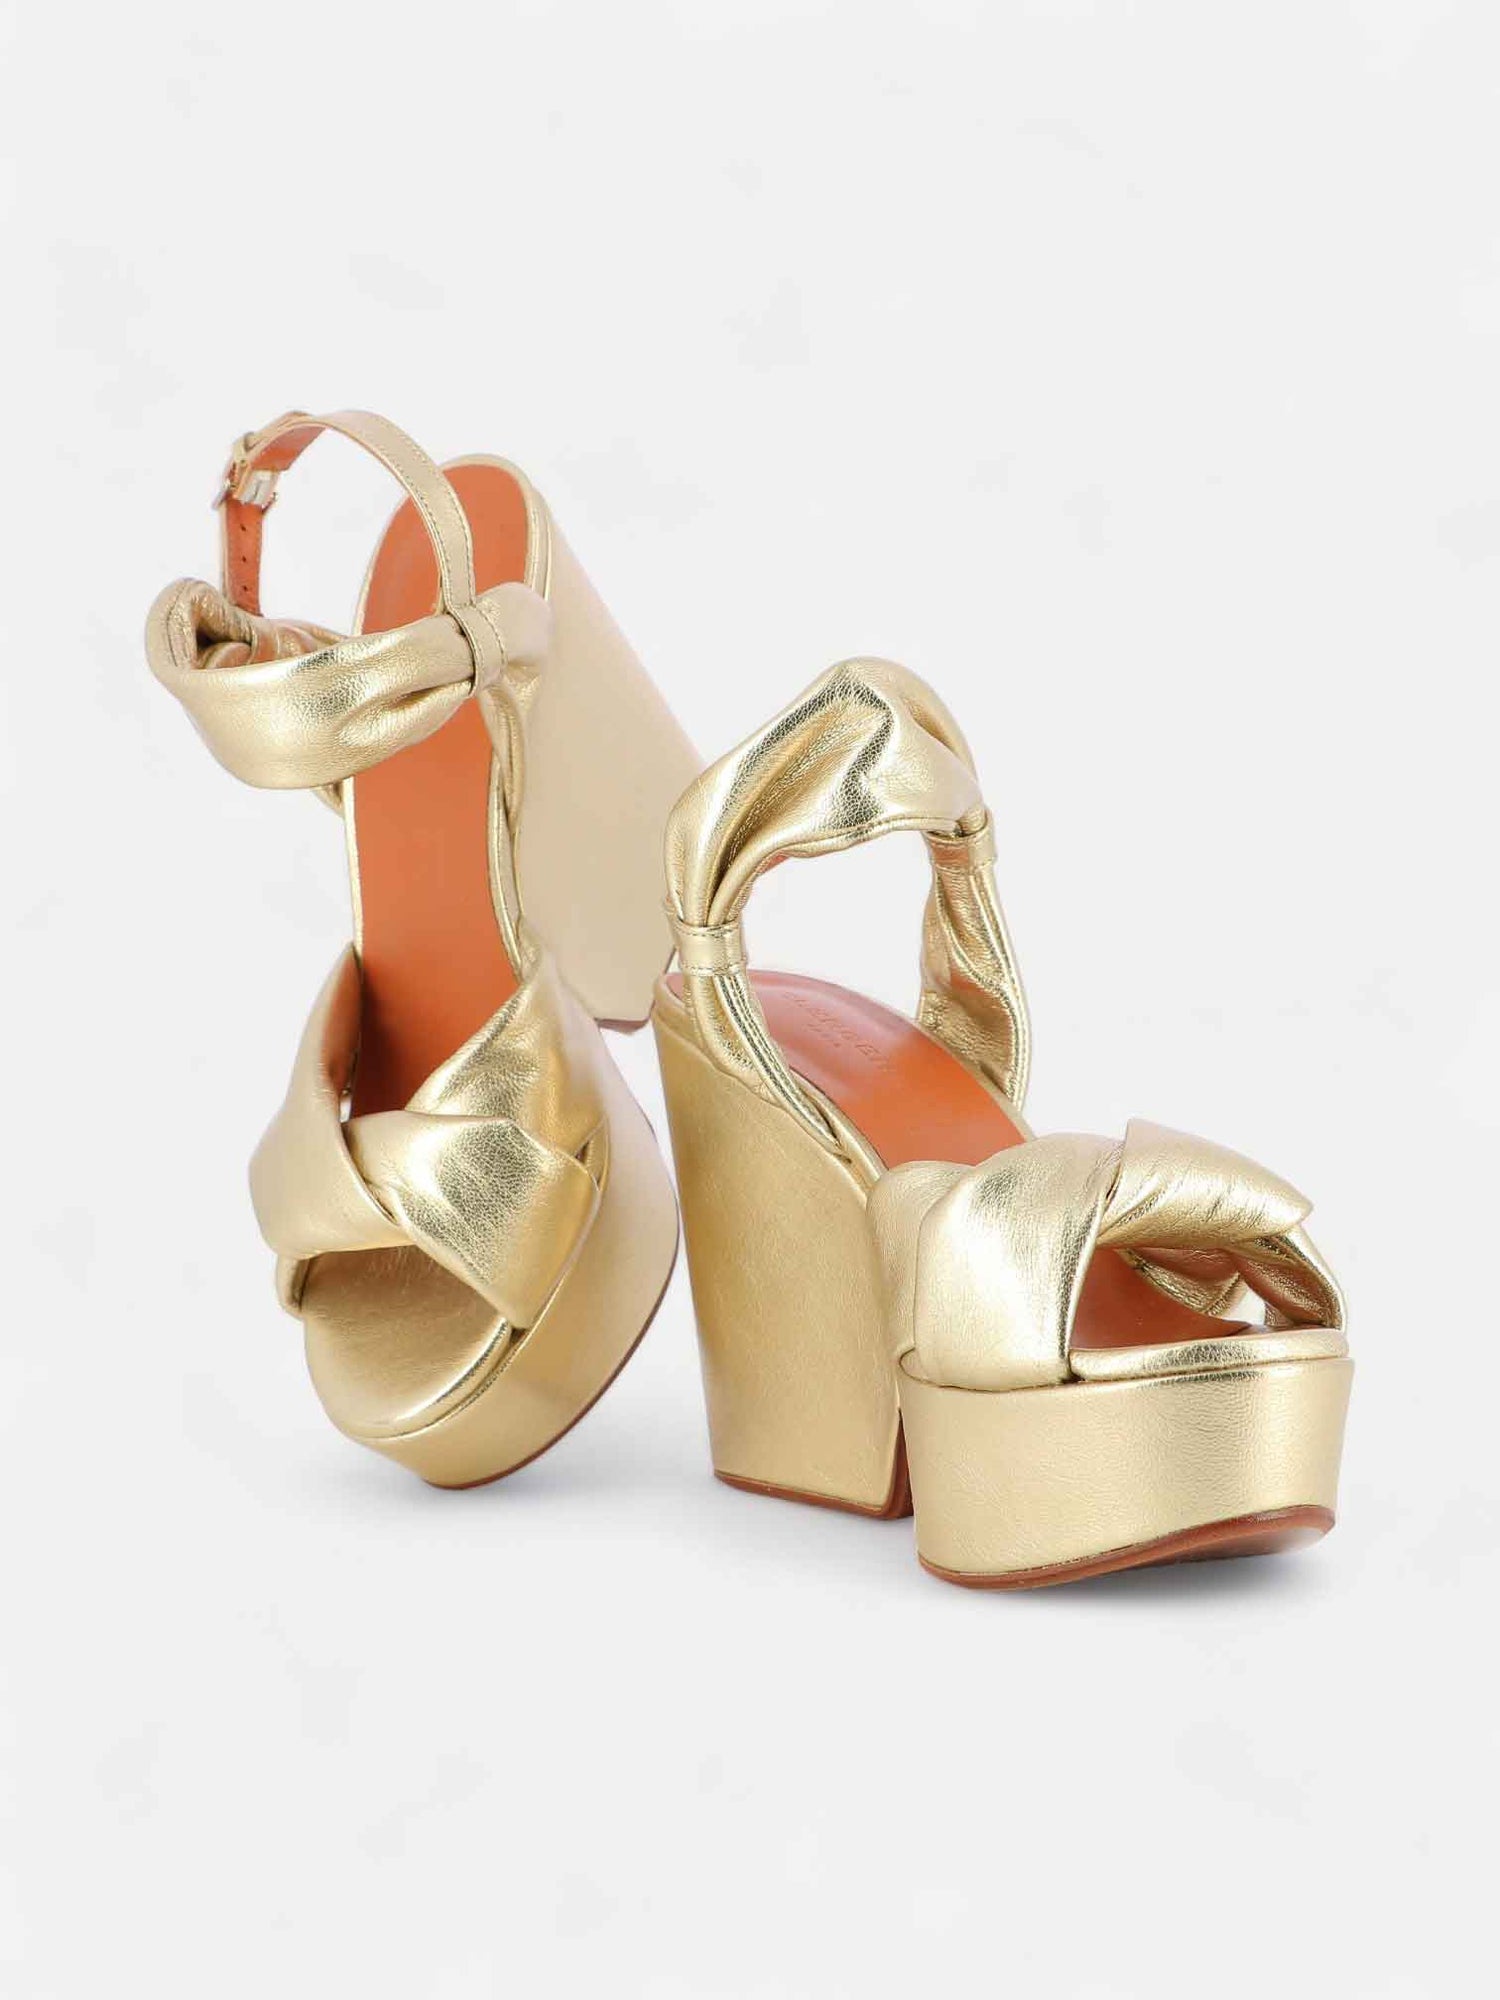 SANDALS - DARLIE sandals, lambskin gold metallic - DARLIEBEIMETM350 - Clergerie Paris - USA